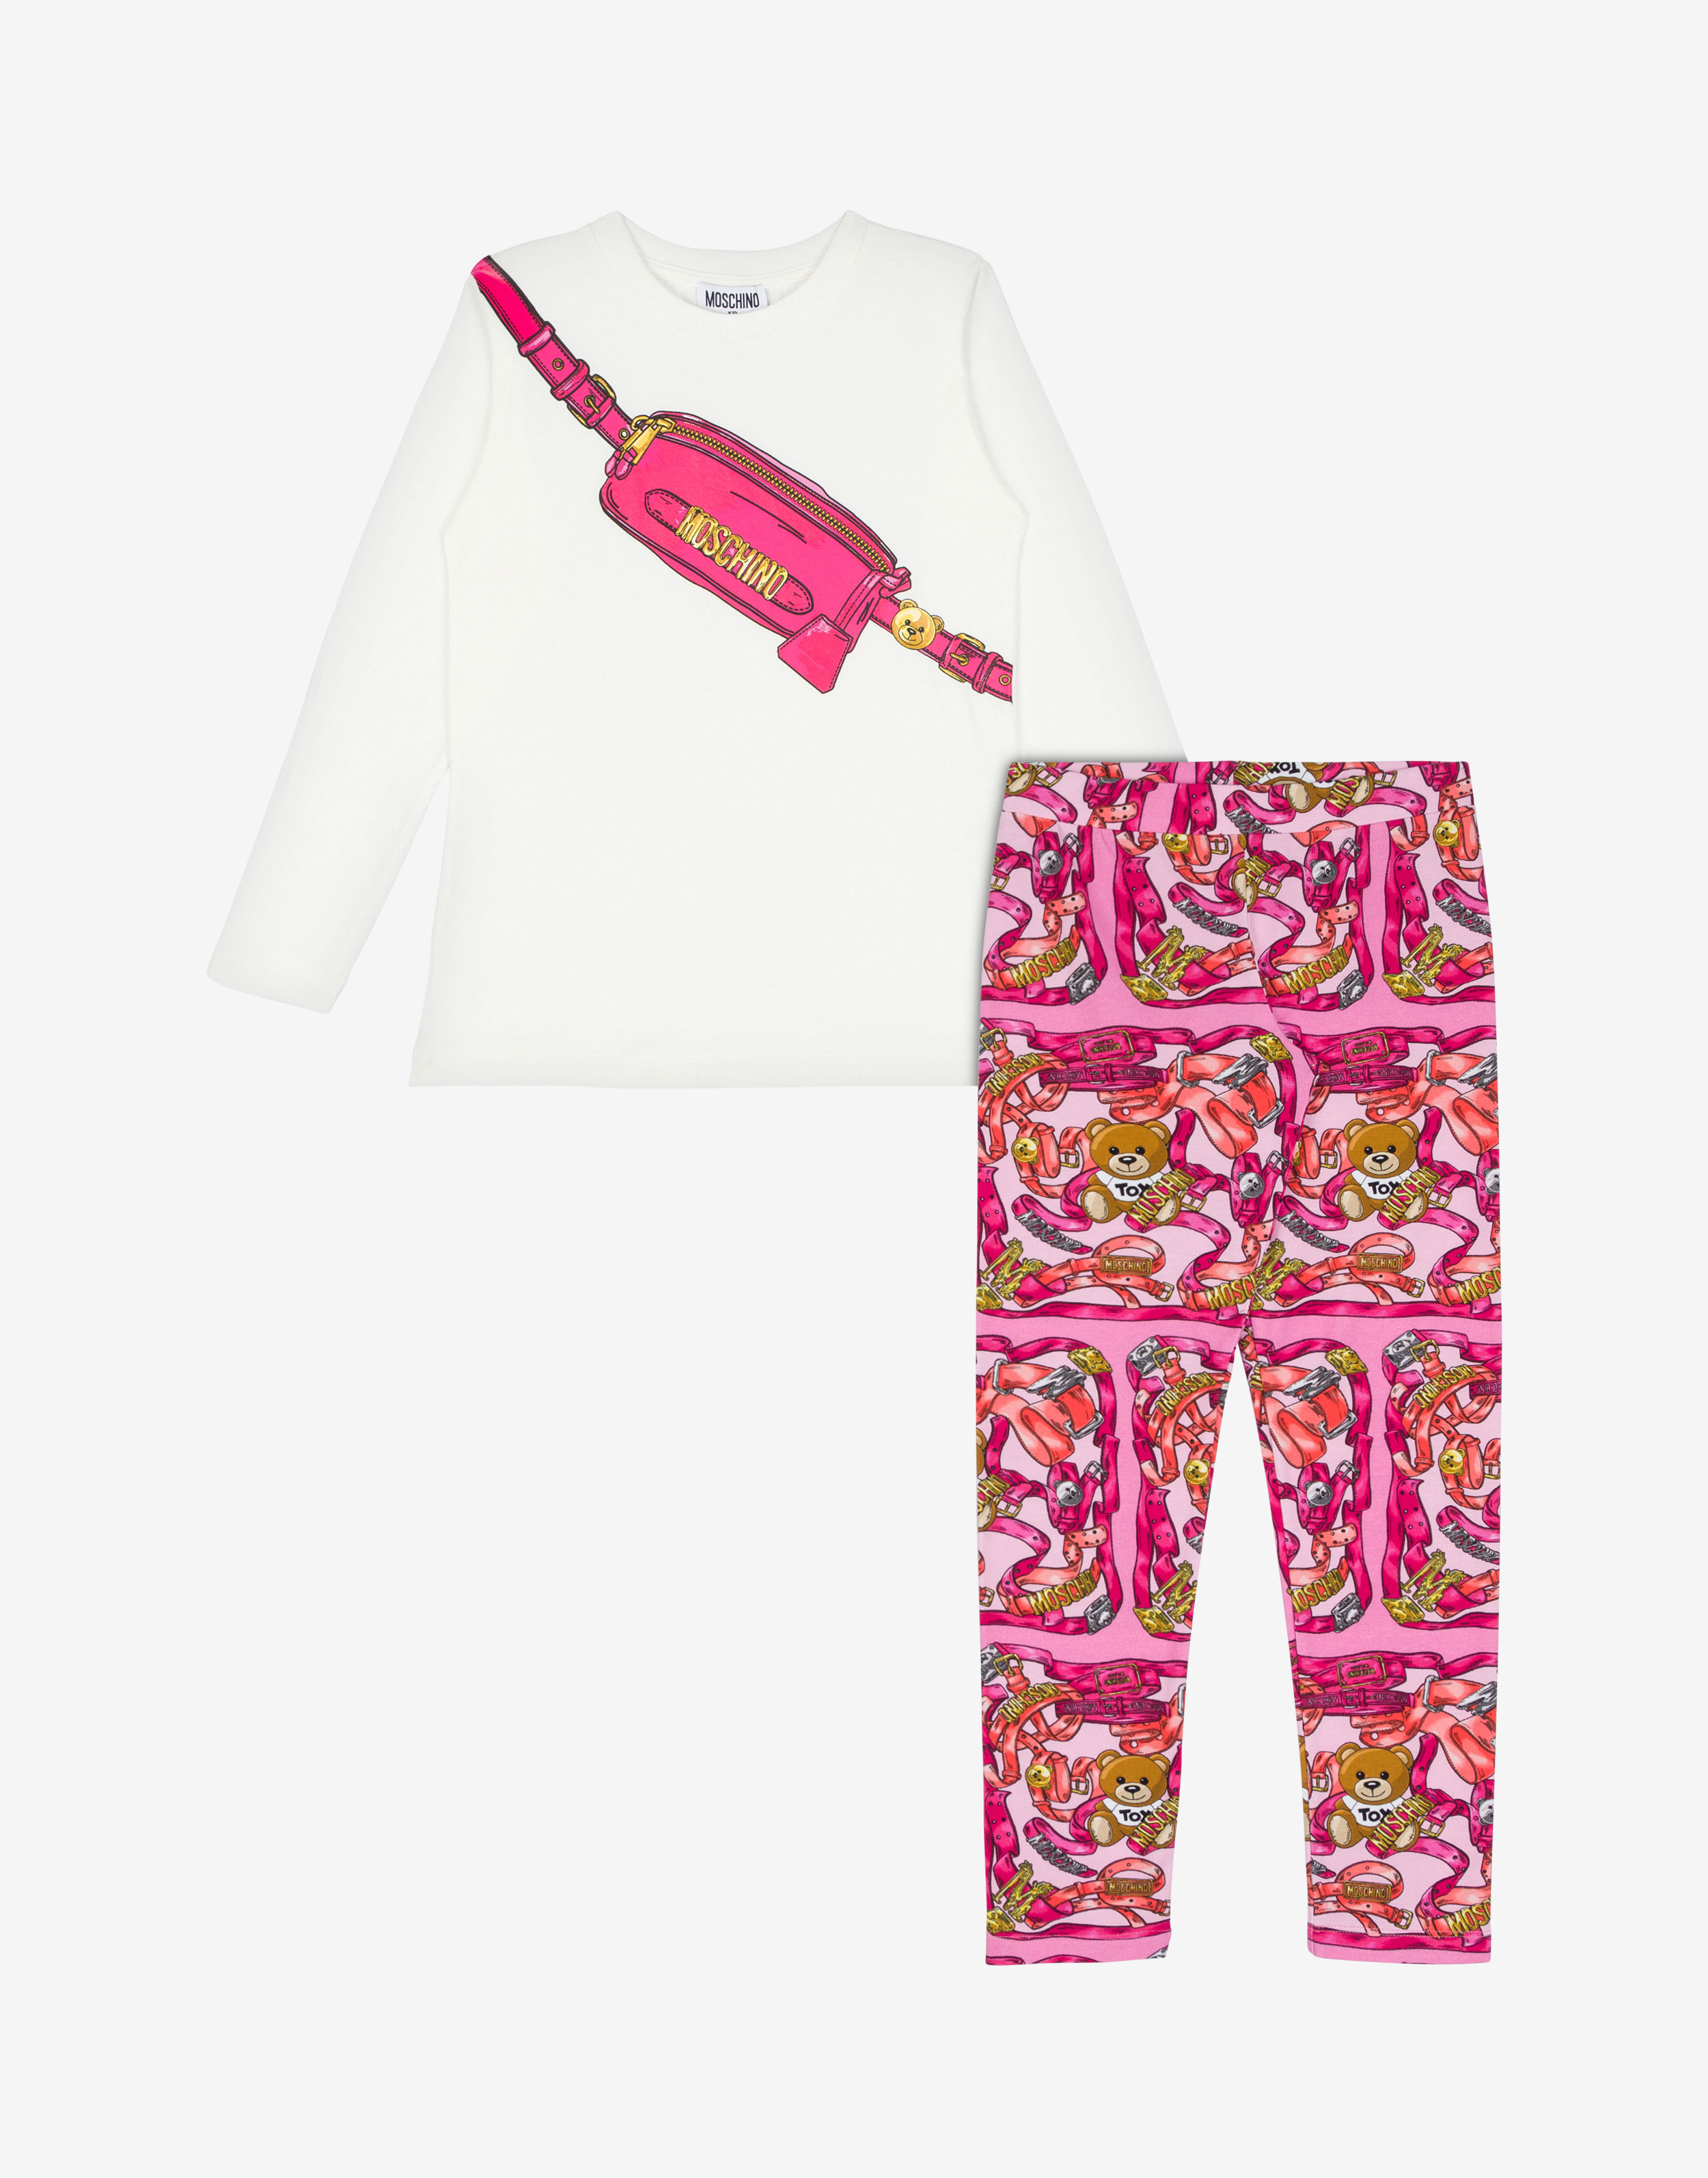 MOSCHINO, Pink Women's Sleepwear